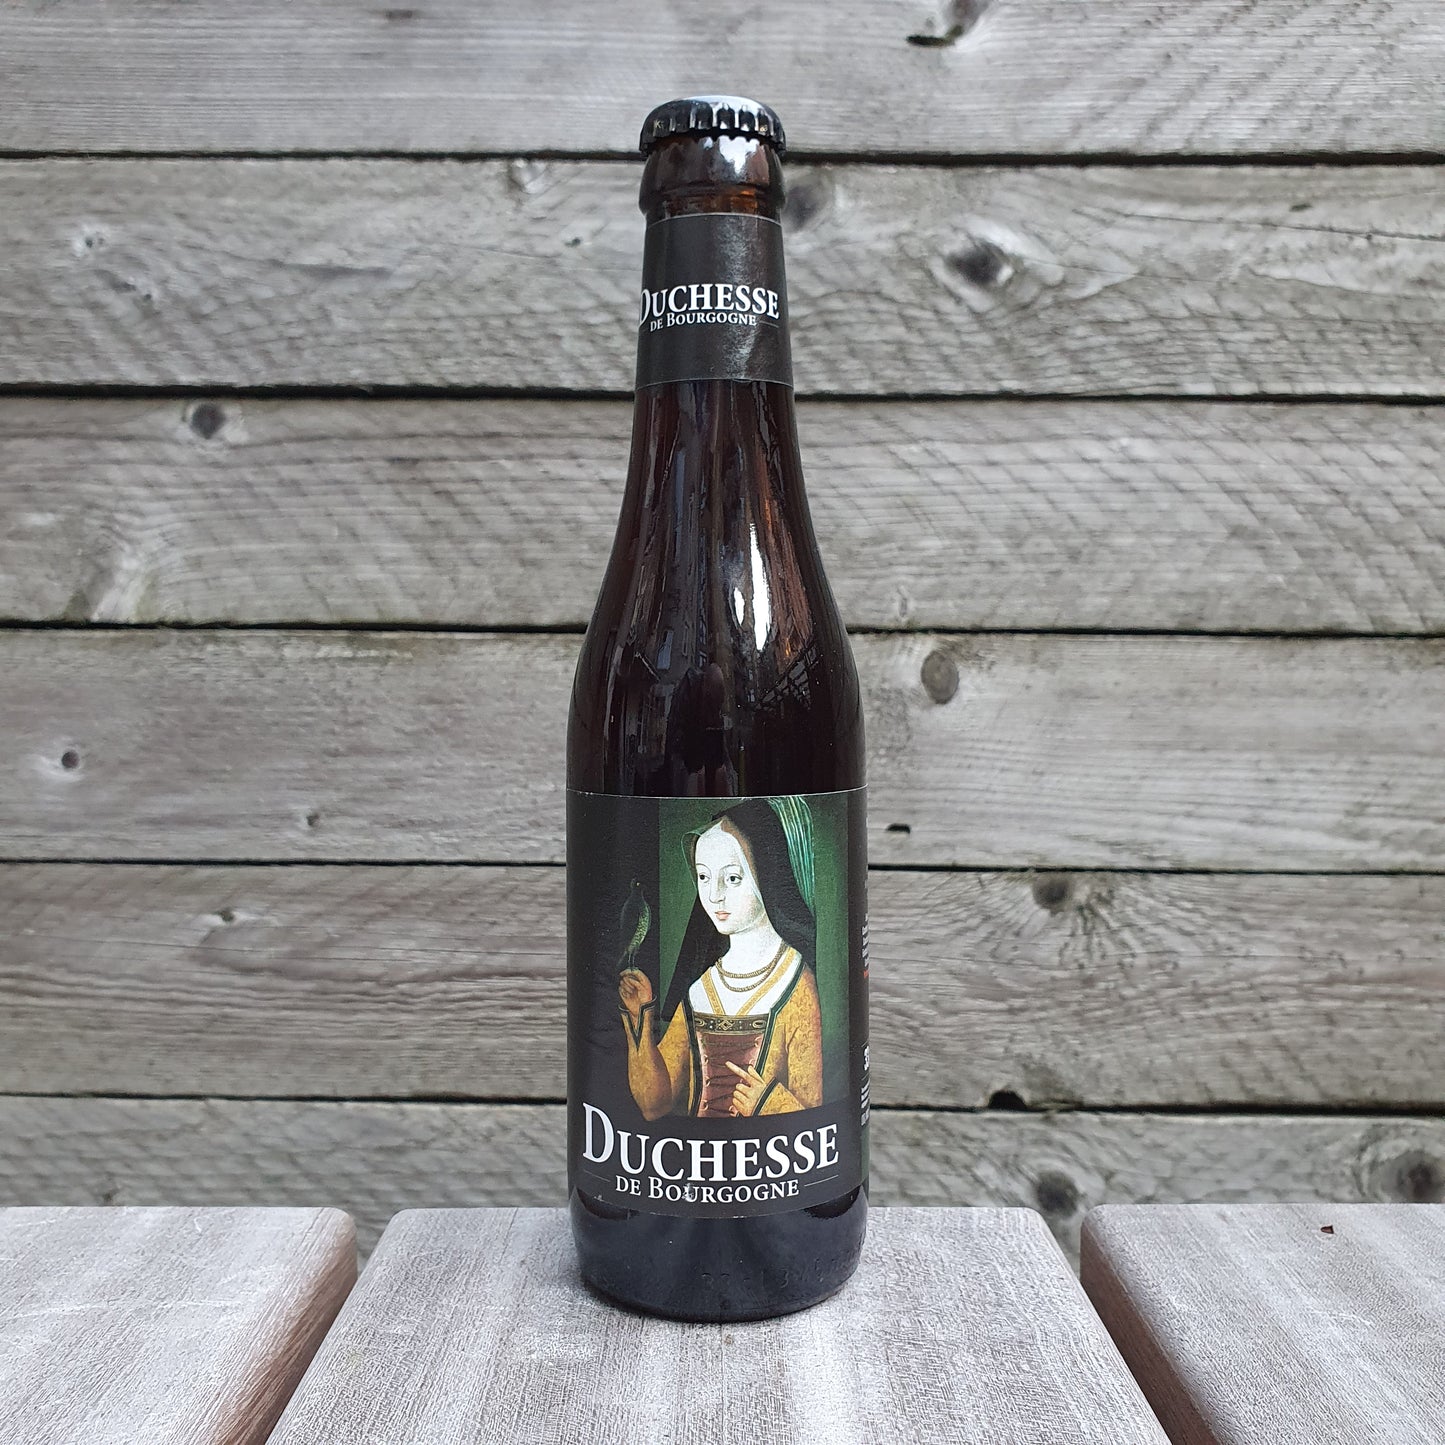 Duchesse de Bourgogne (Flanders Red Ale)